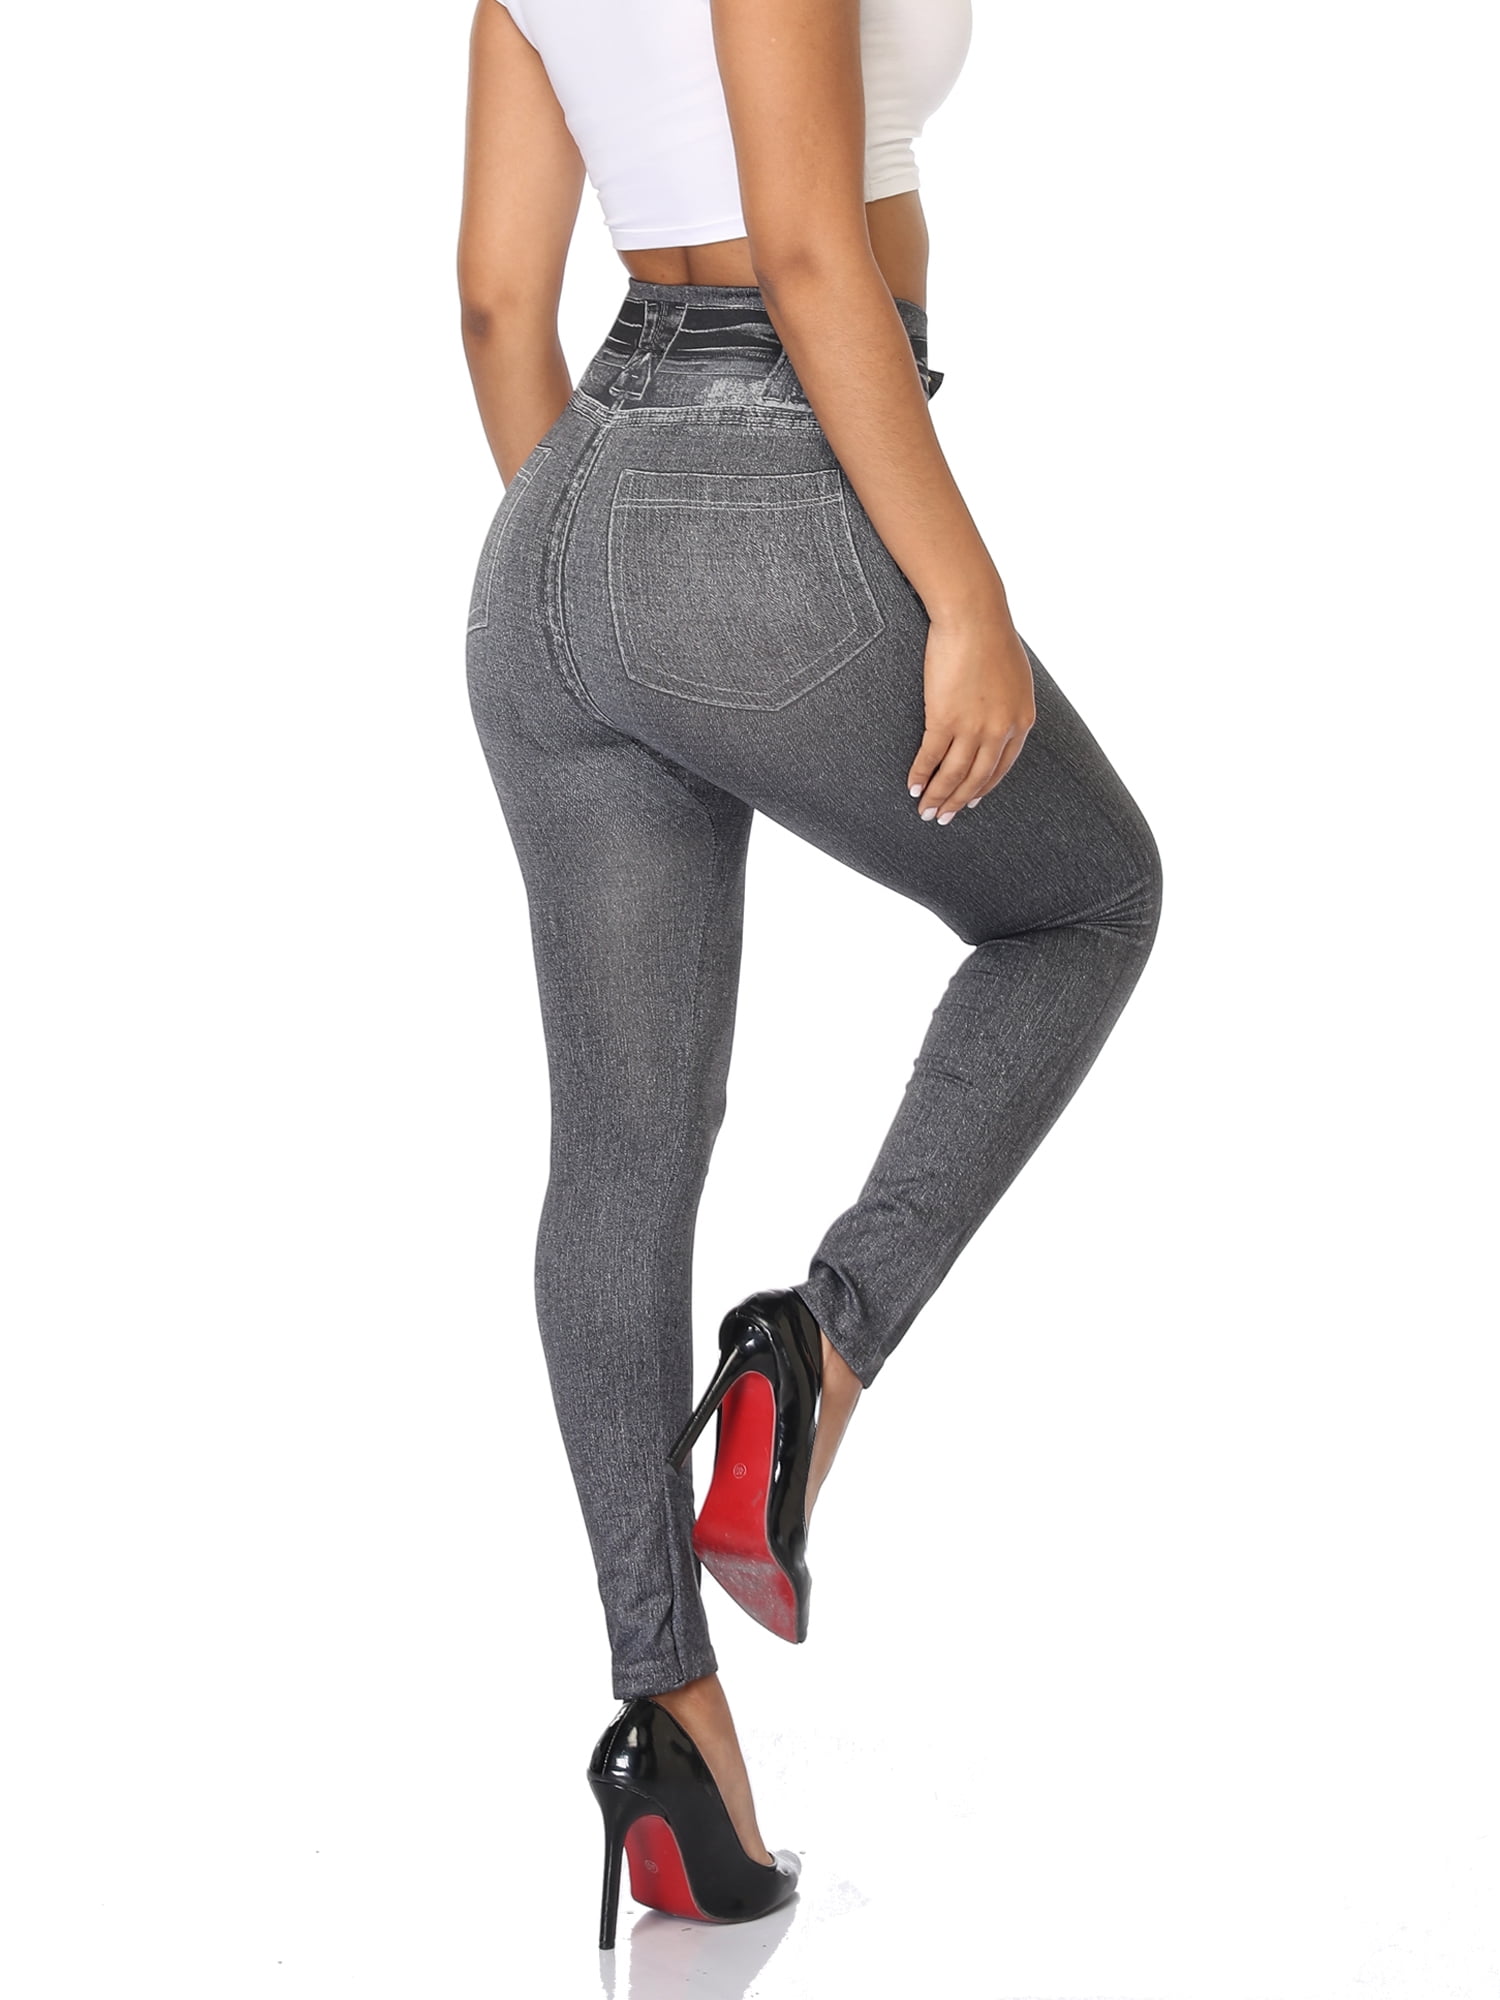 MISS MOLY Women's Skinny Stretch Pull-On Knit Jegging Pants Fit Denim Jeans - Walmart.com